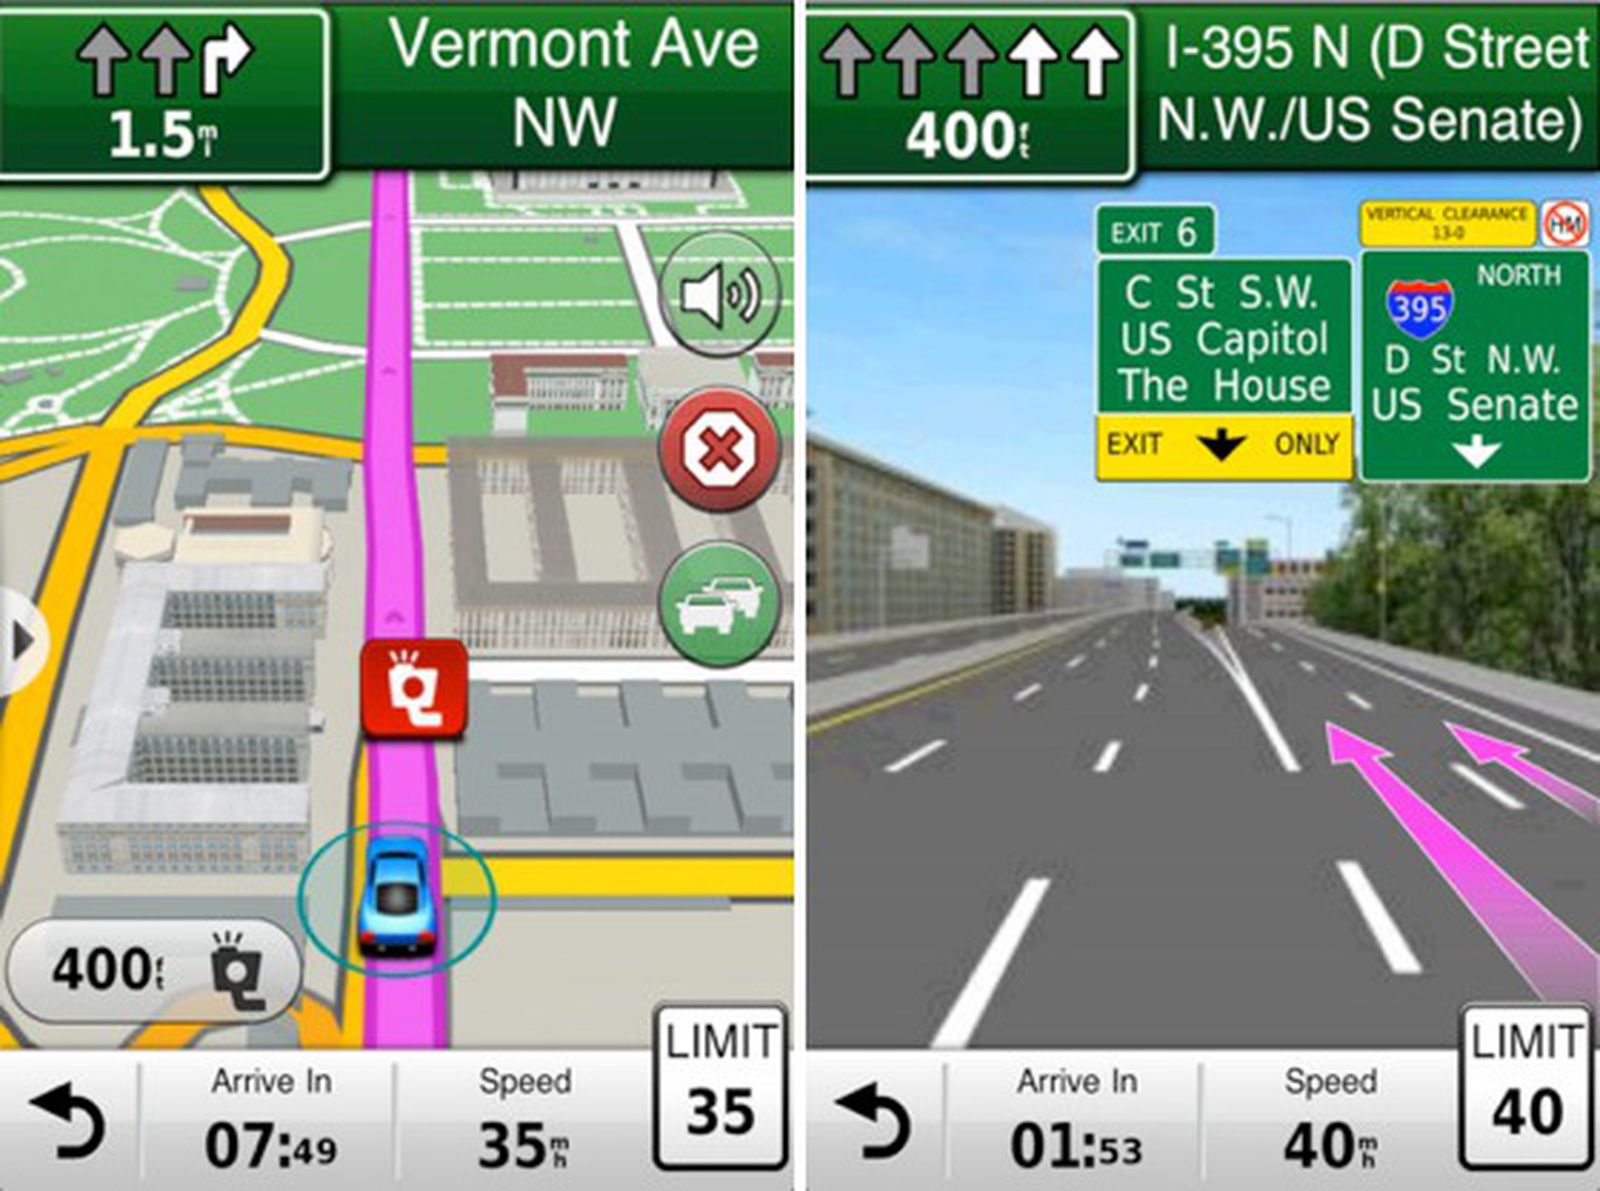 Garmin Releases Update to StreetPilot Navigation App With Google Street